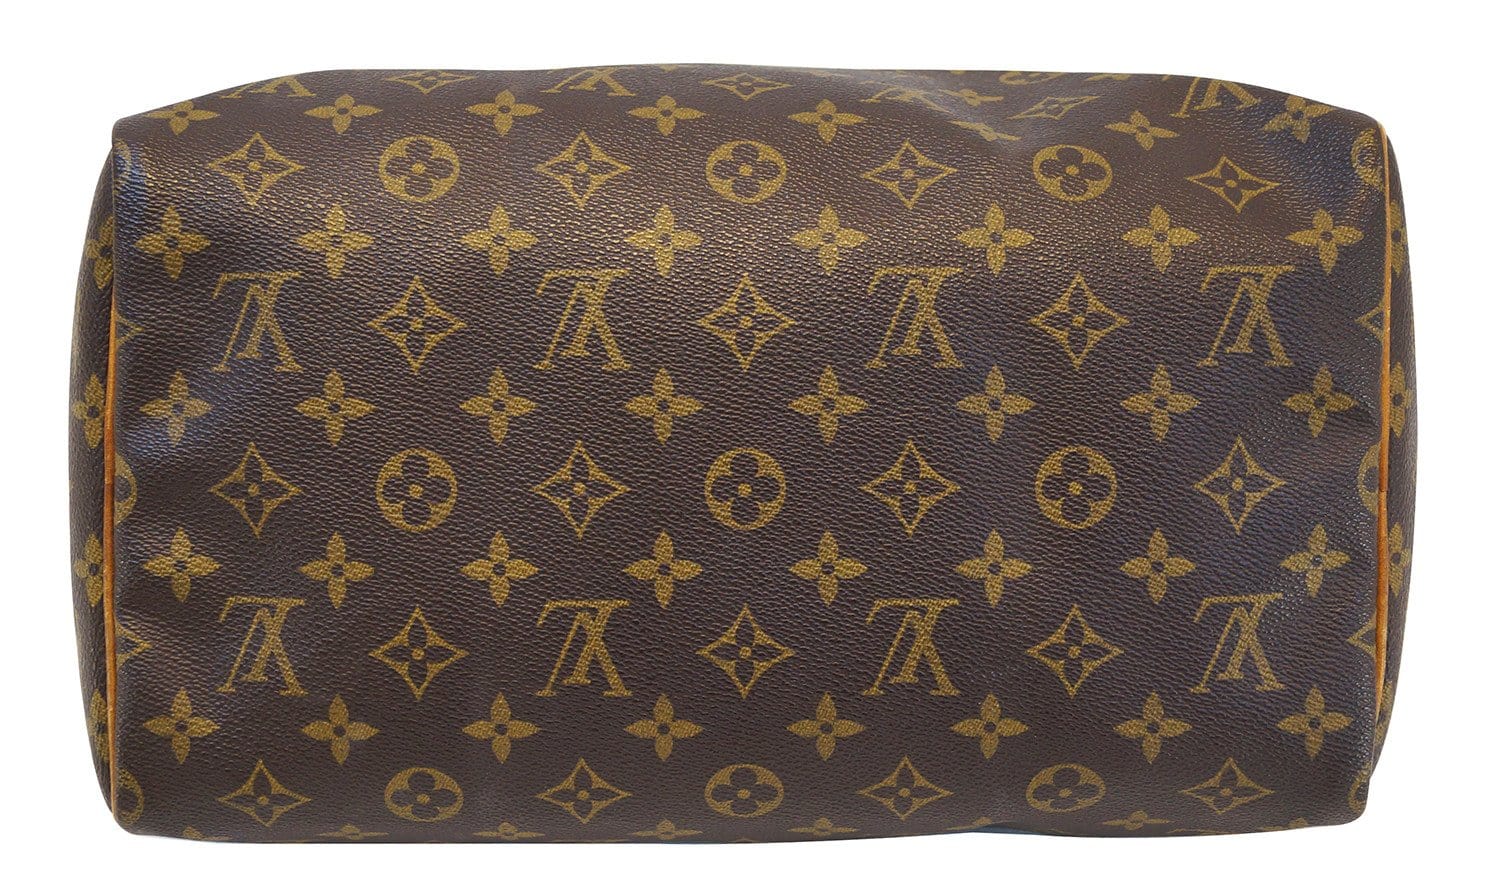 Louis Vuitton Speedy Handbag 304561